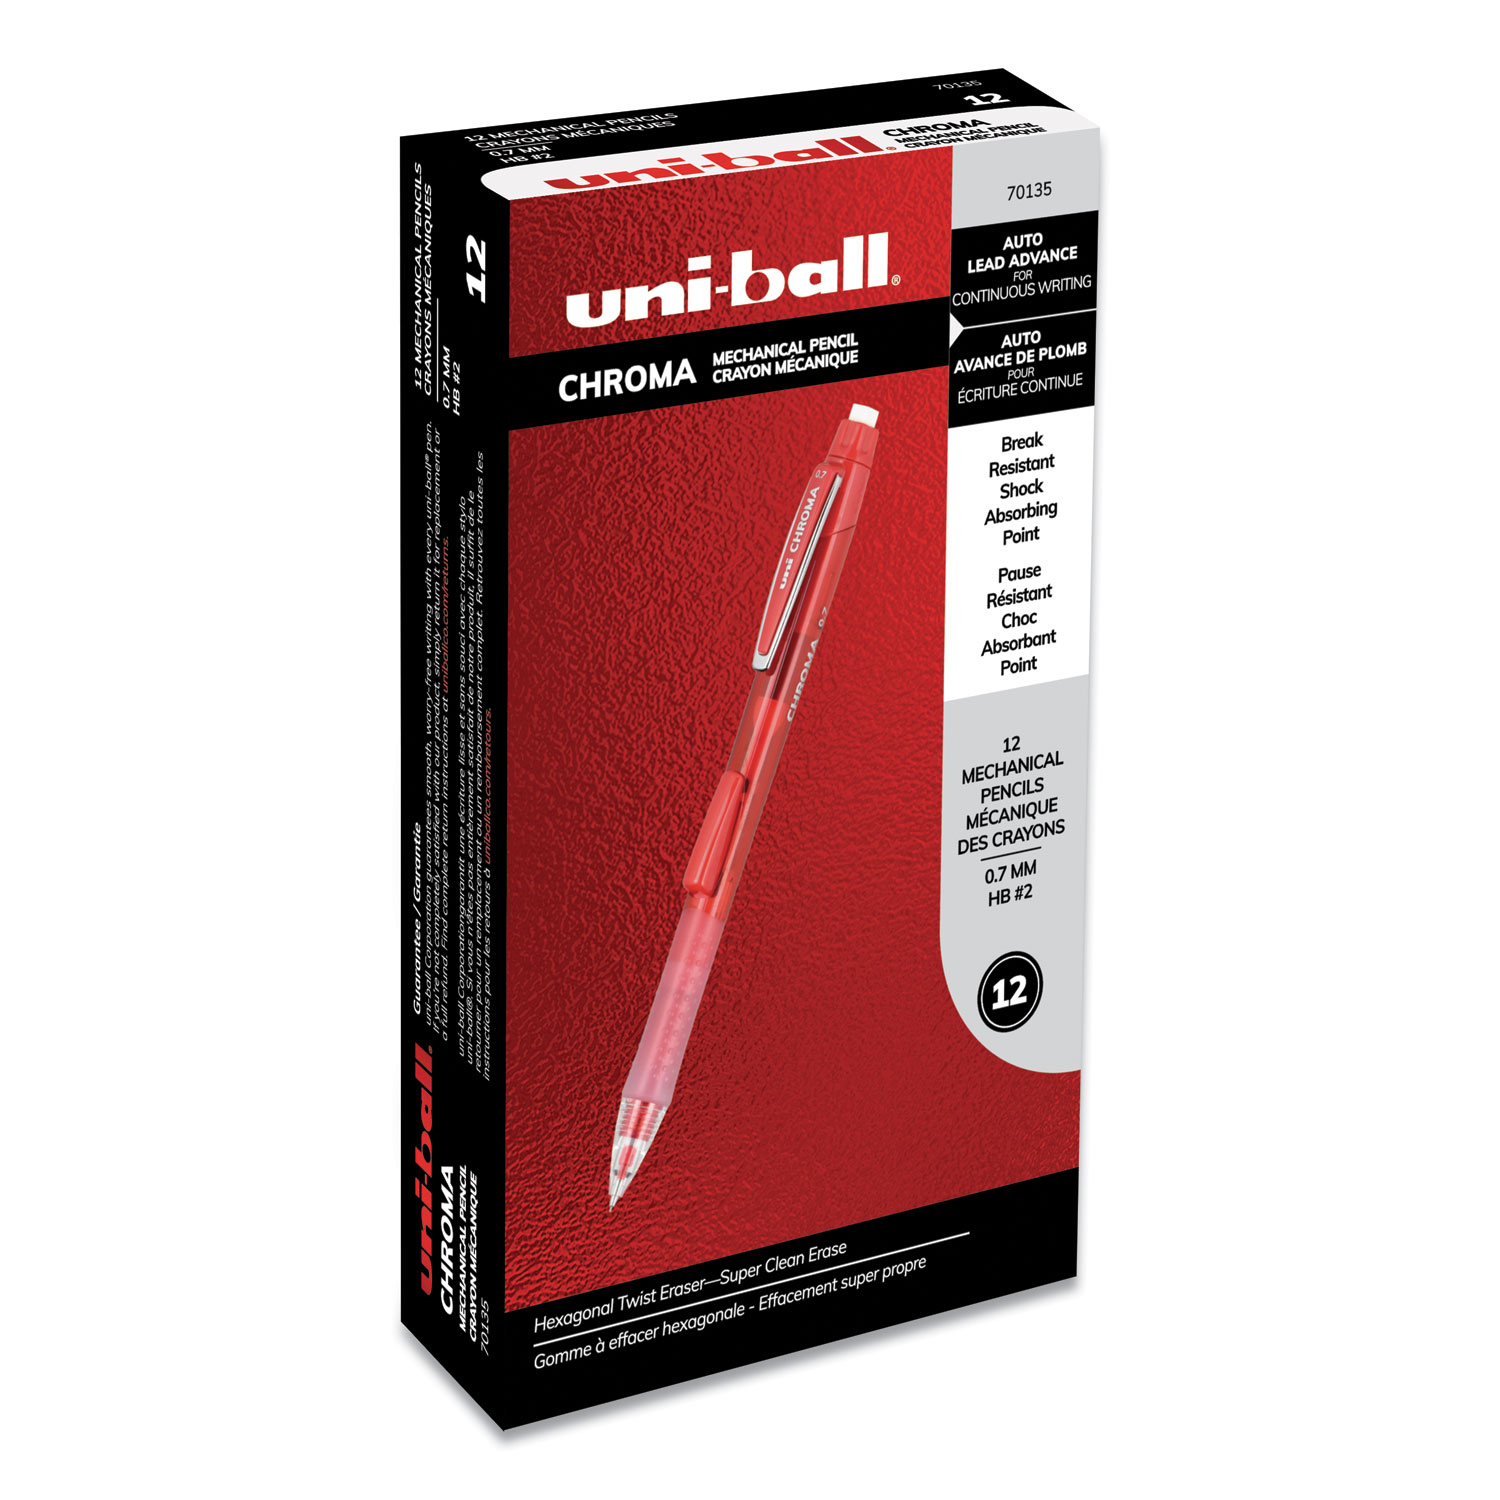  uni-ball 70135 Chroma Mechanical Pencil, 0.7 mm, HB (#2), Black Lead, Red Barrel, Dozen (UBC70135) 